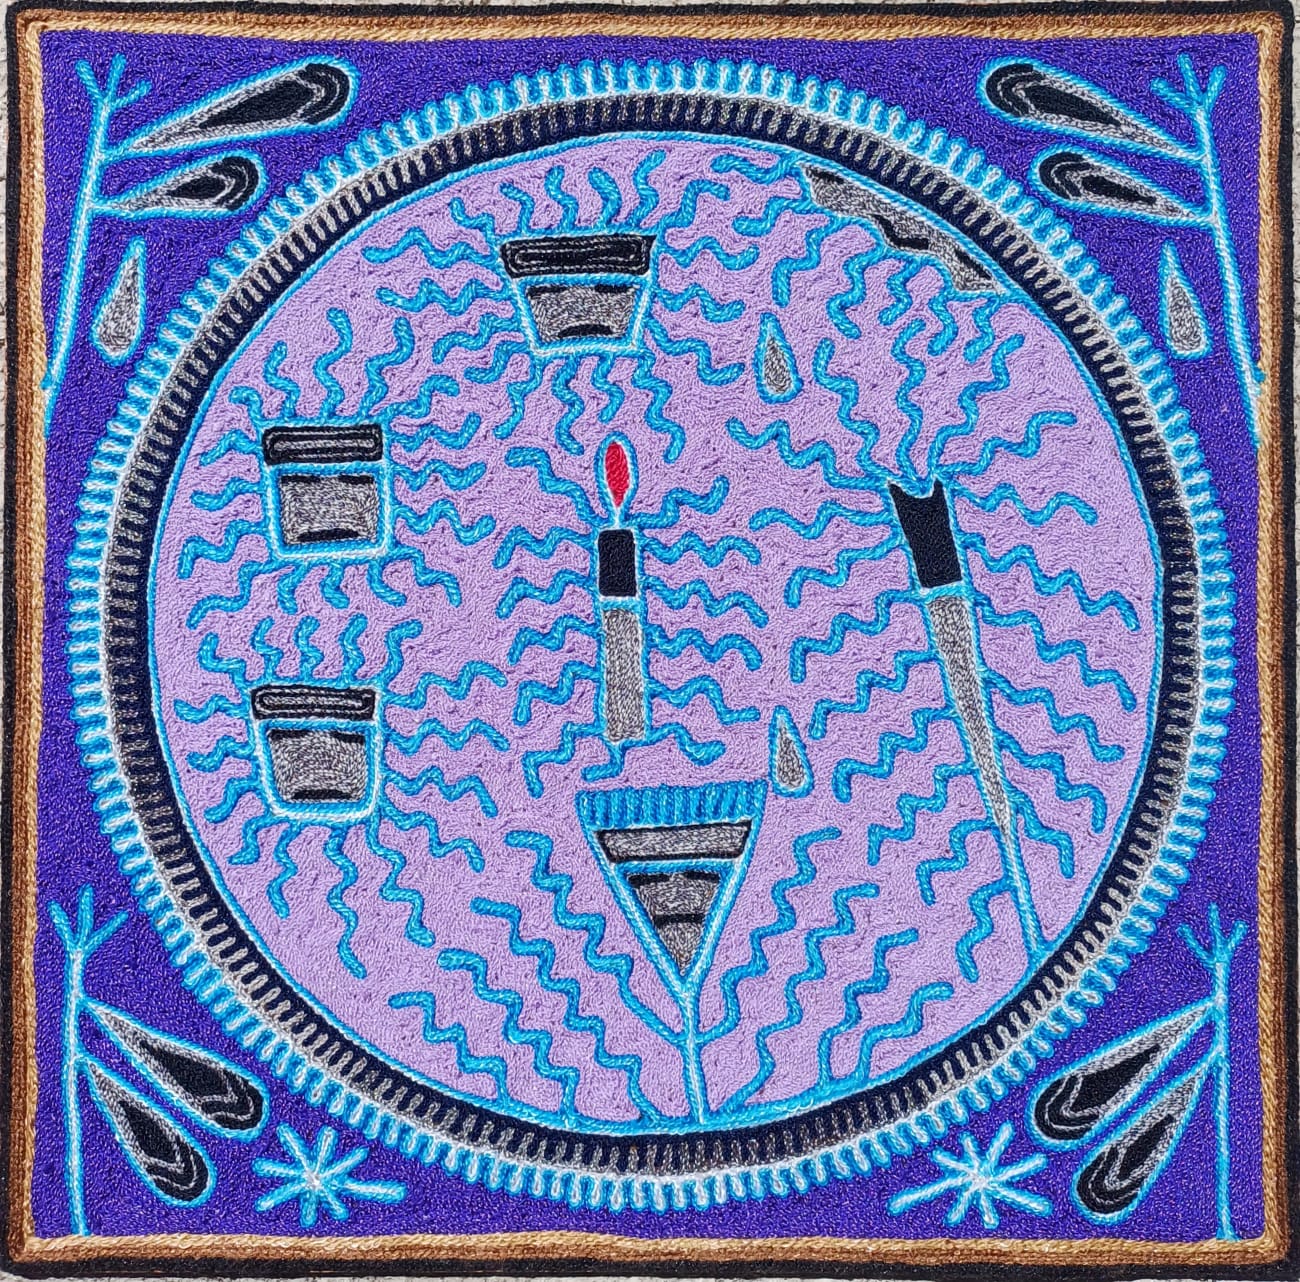 Huichol Indian Mexican Folk Art Yarn Painting By Silverio Gonzalez Rios PP7061